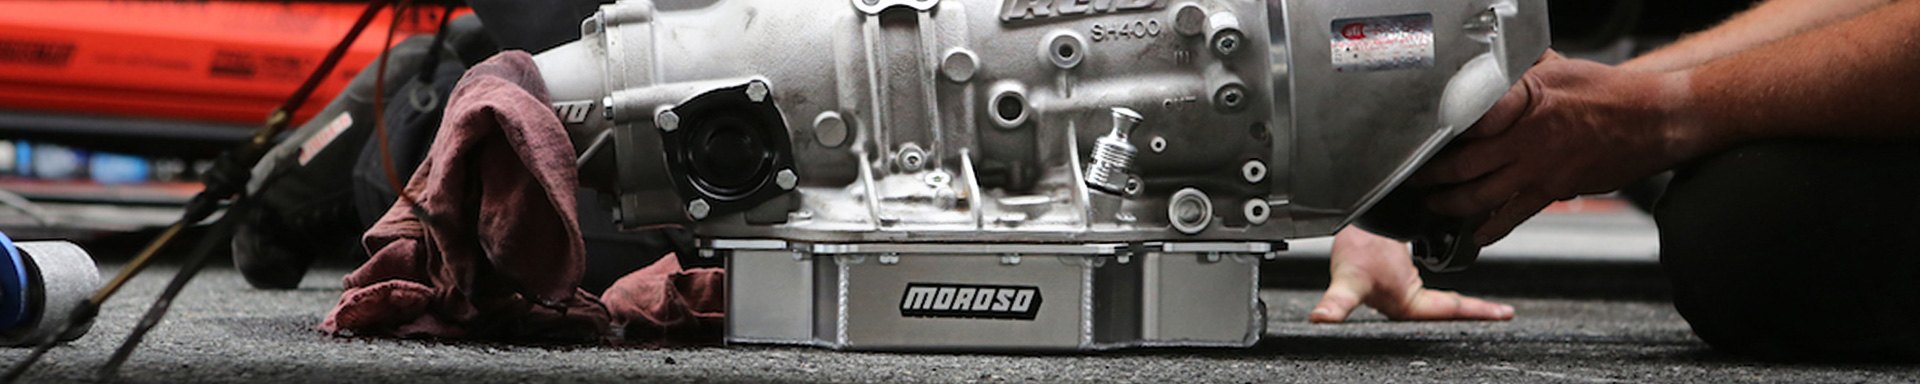 Moroso Wheel & Tire Service Tools